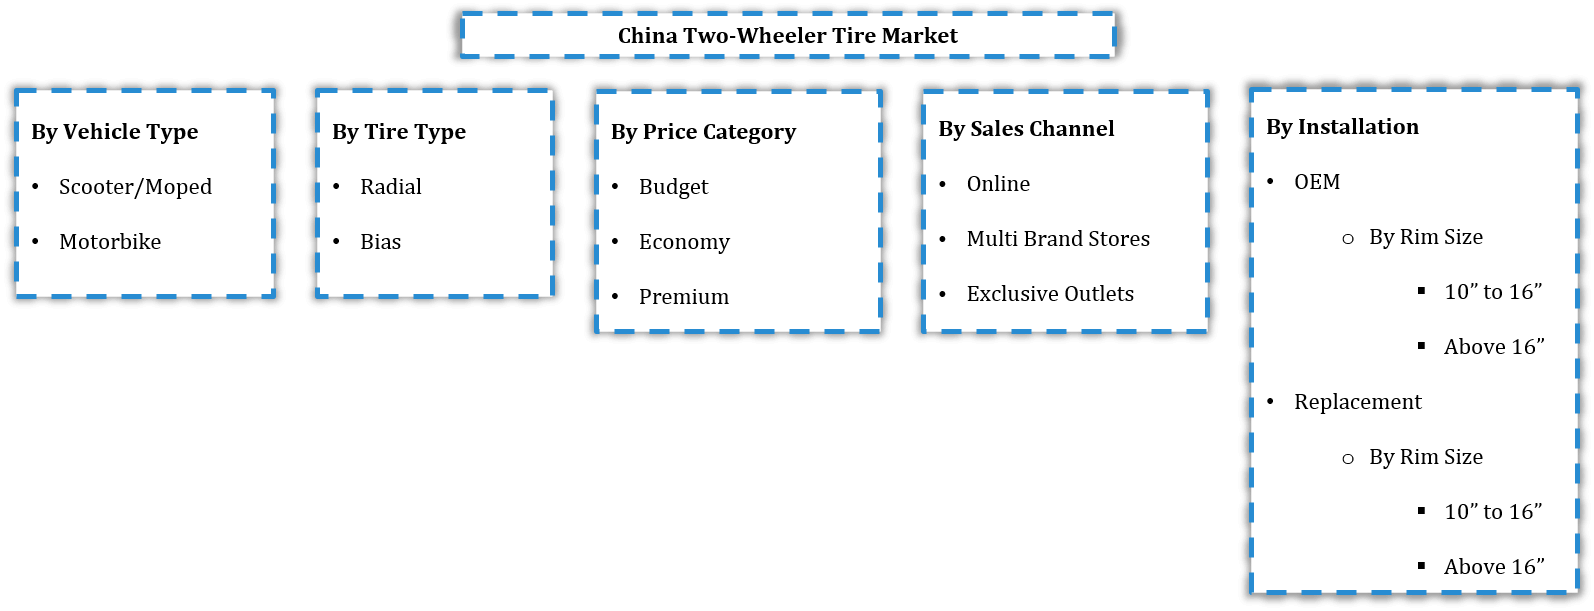 China 2-Wheeler Tire Market Segmentation